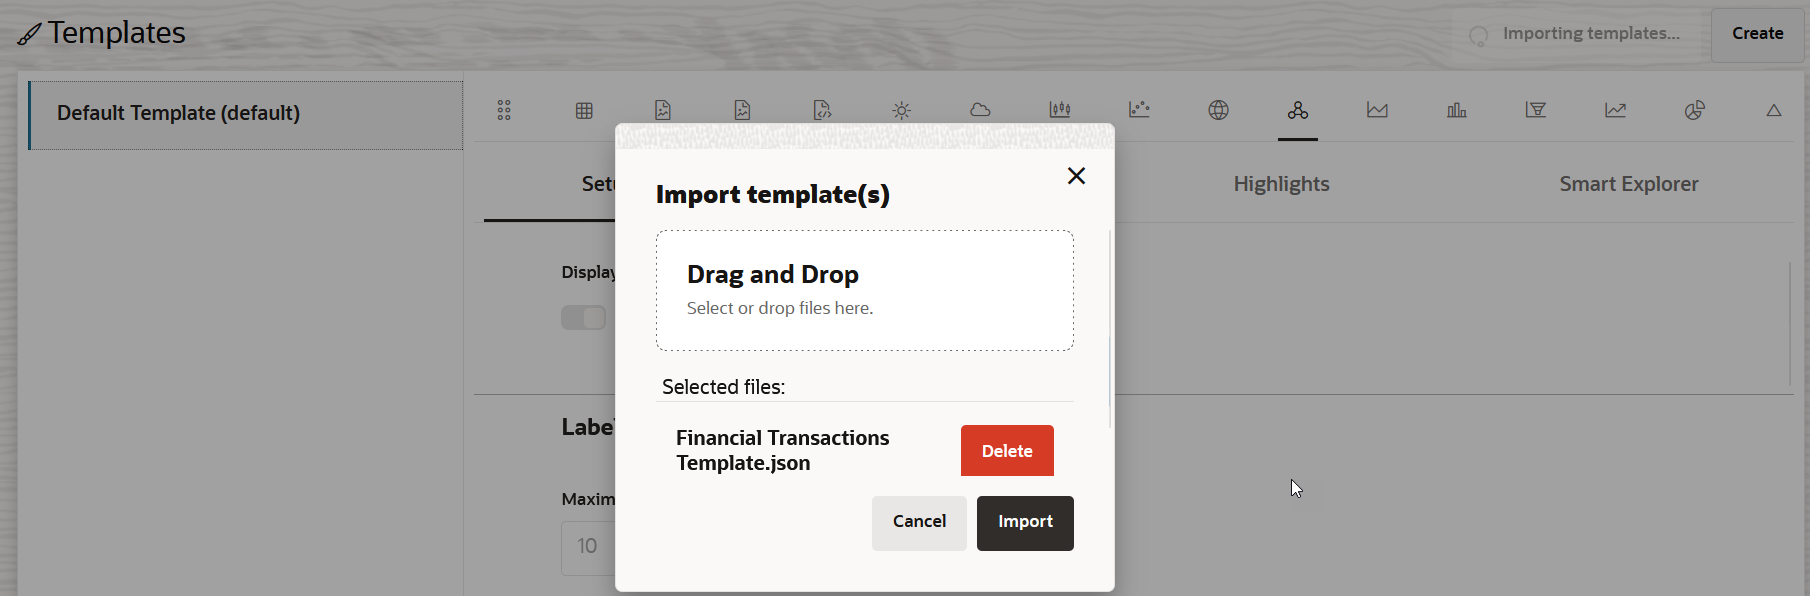 Description of import_templates.png follows